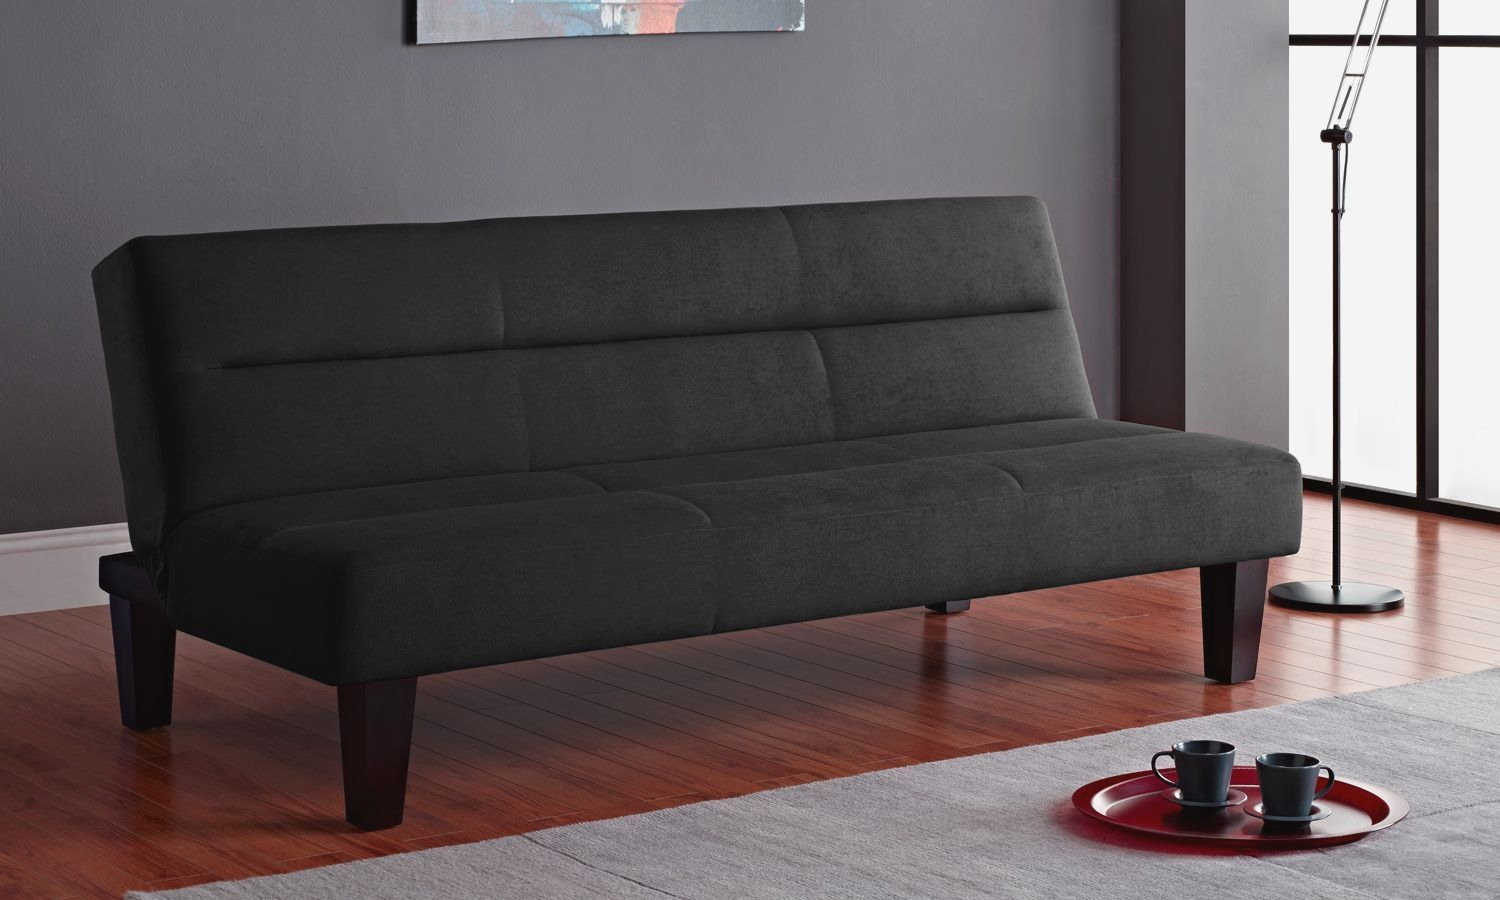 kmart multi functional sofa bed review